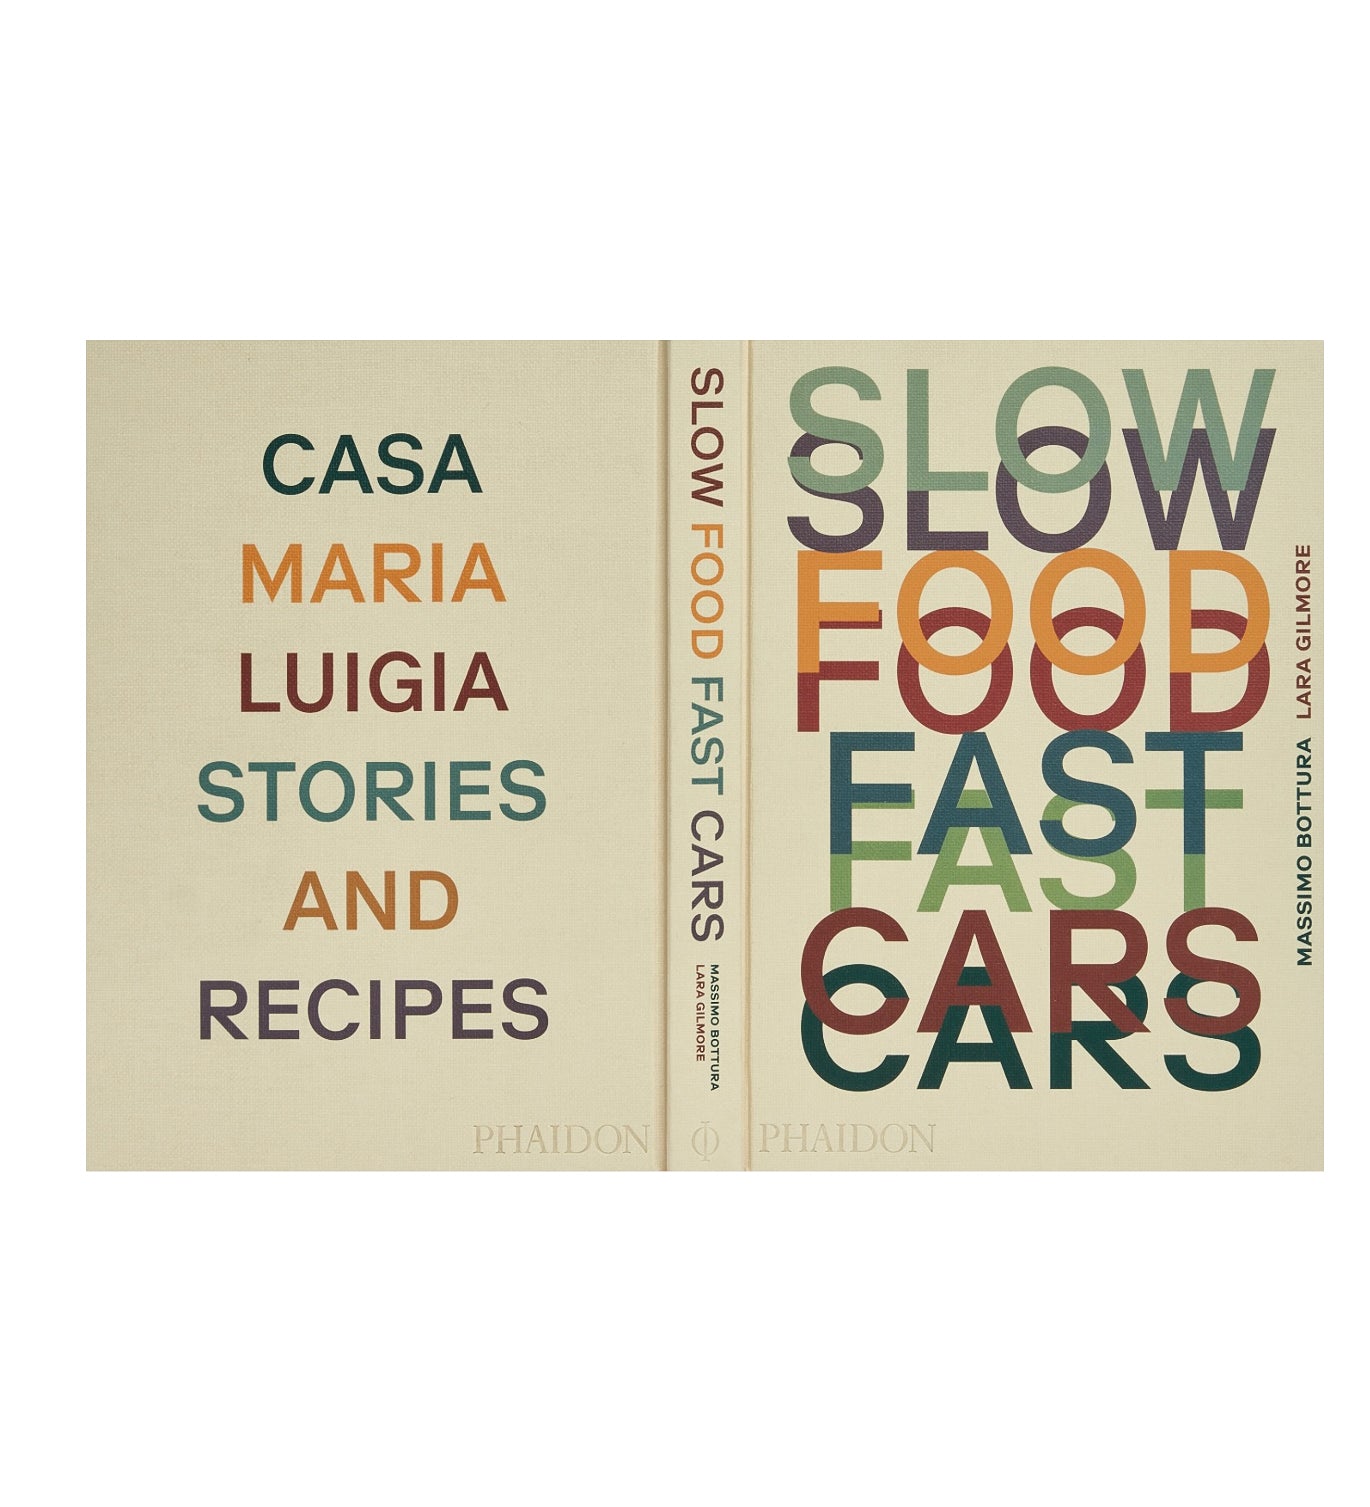 "Slow Food, voitures rapides : Casa Maria Luigia"